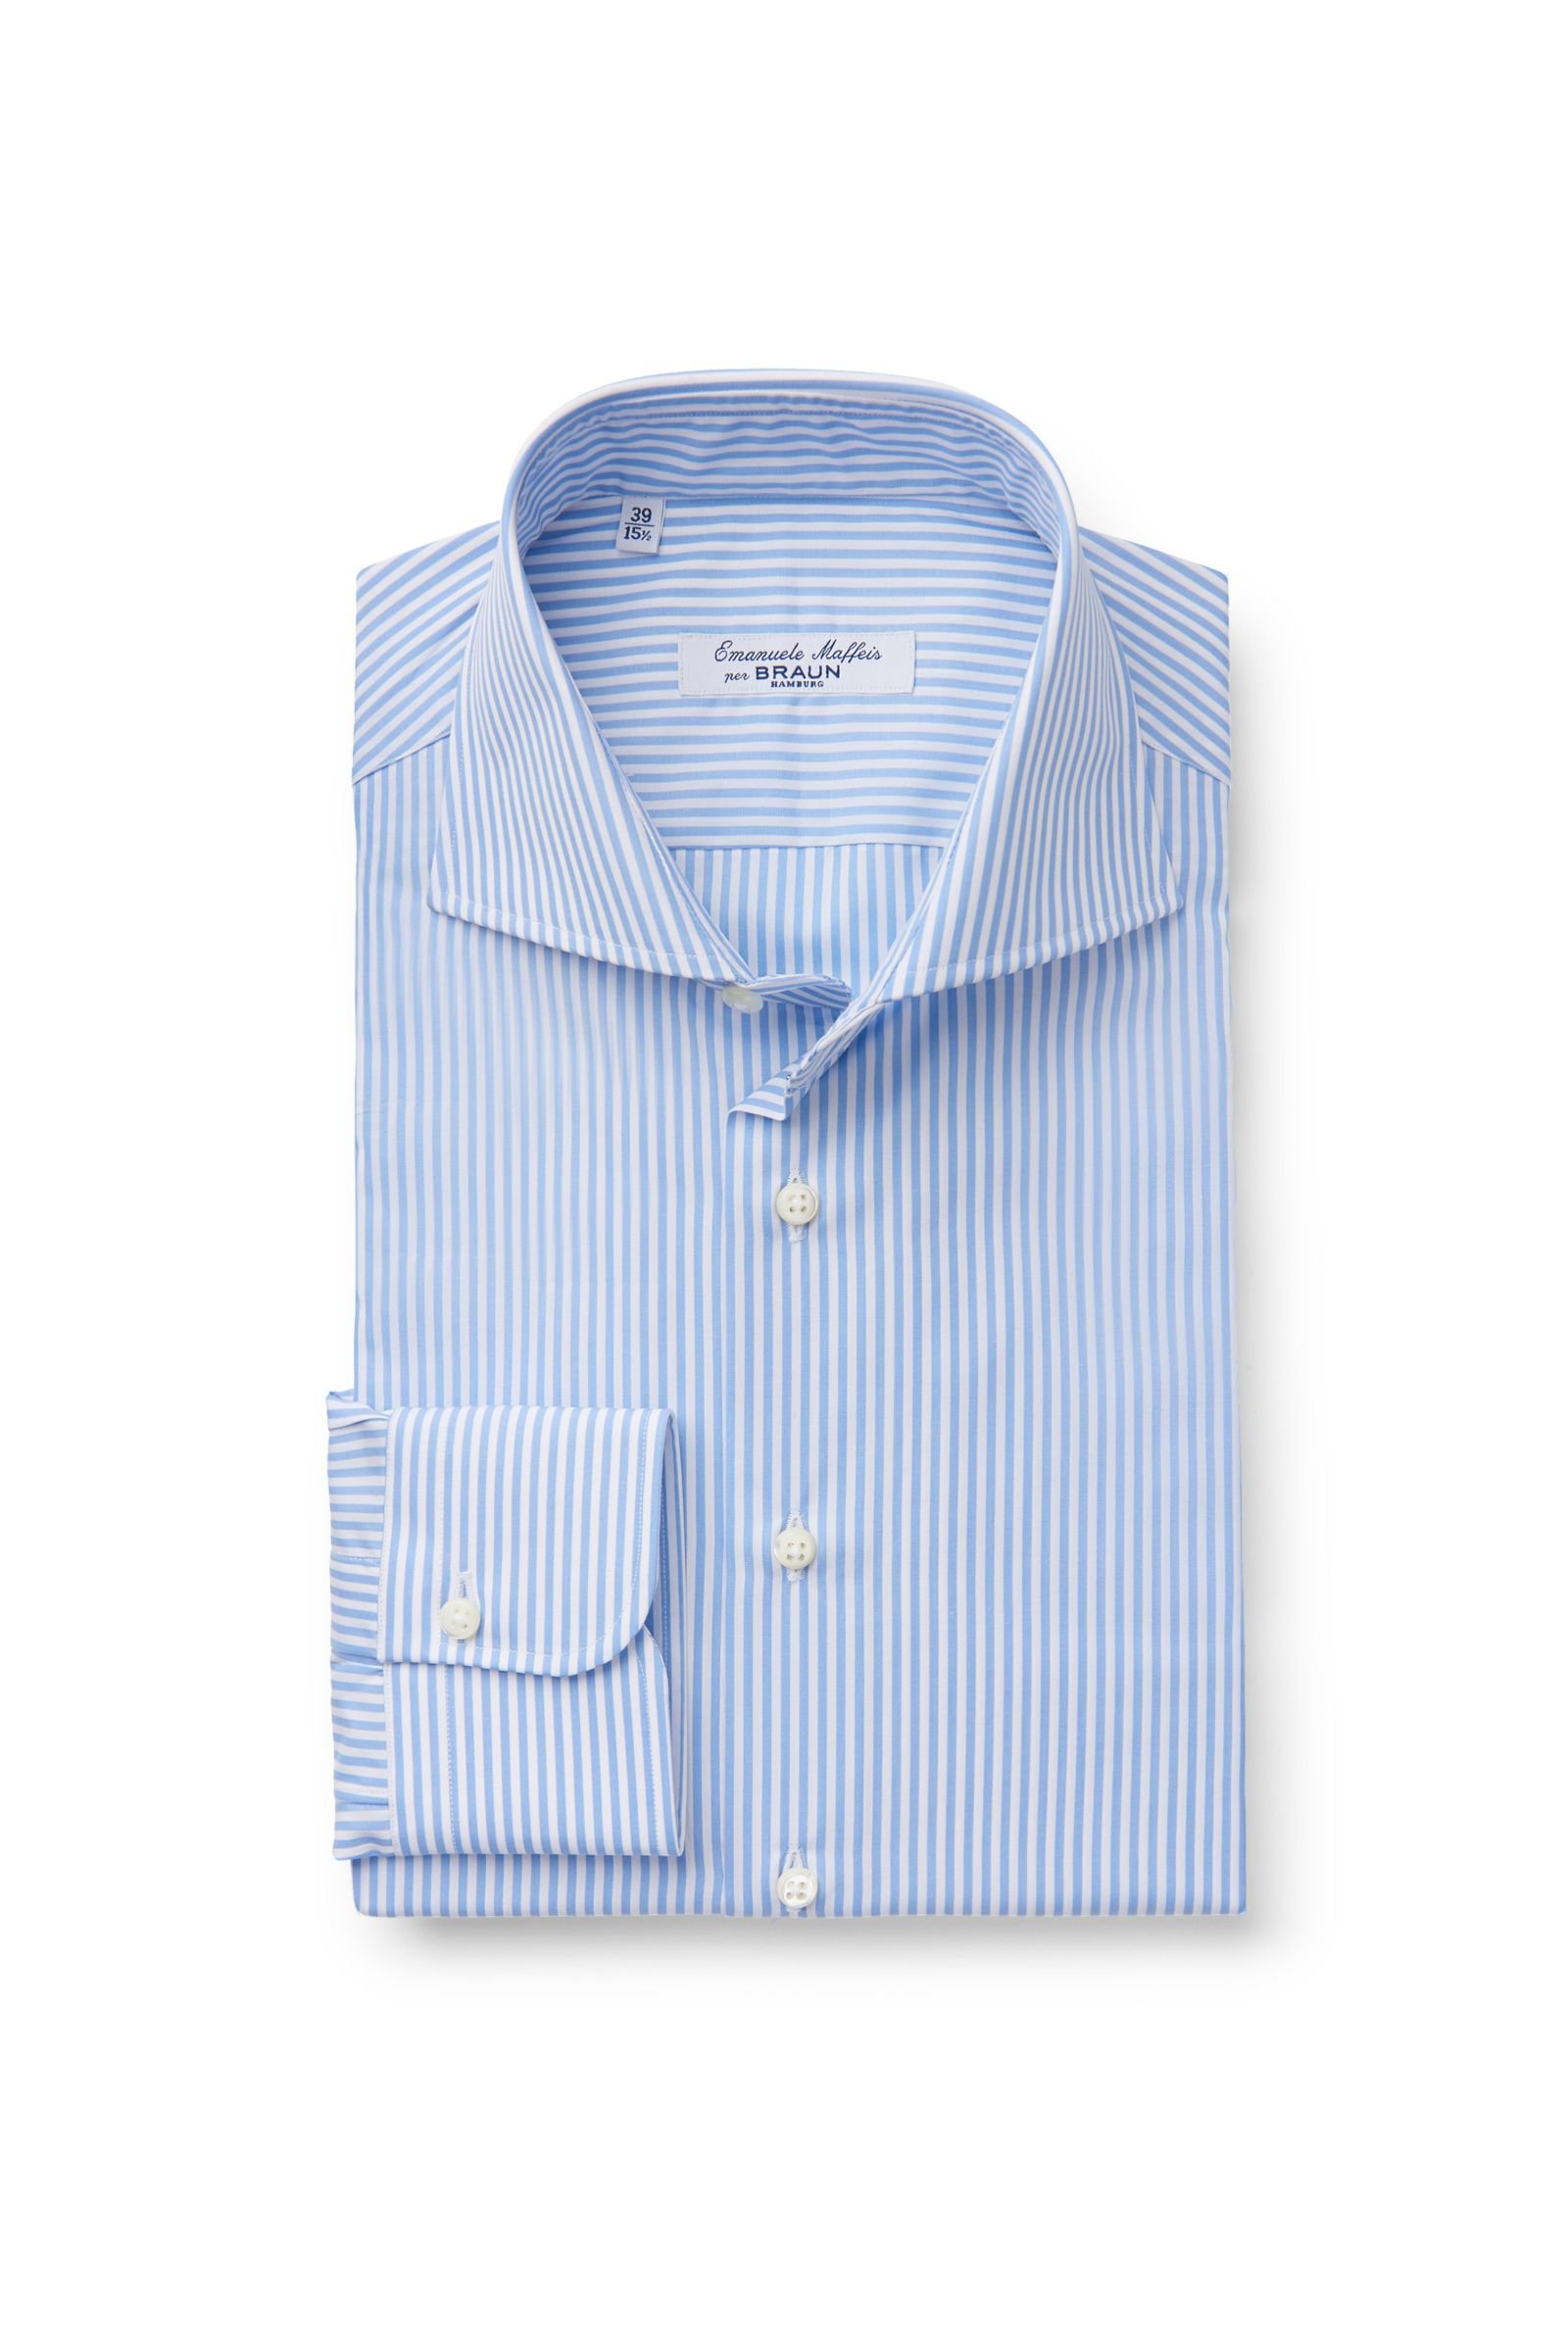 Business shirt 'Porto' shark collar light blue striped